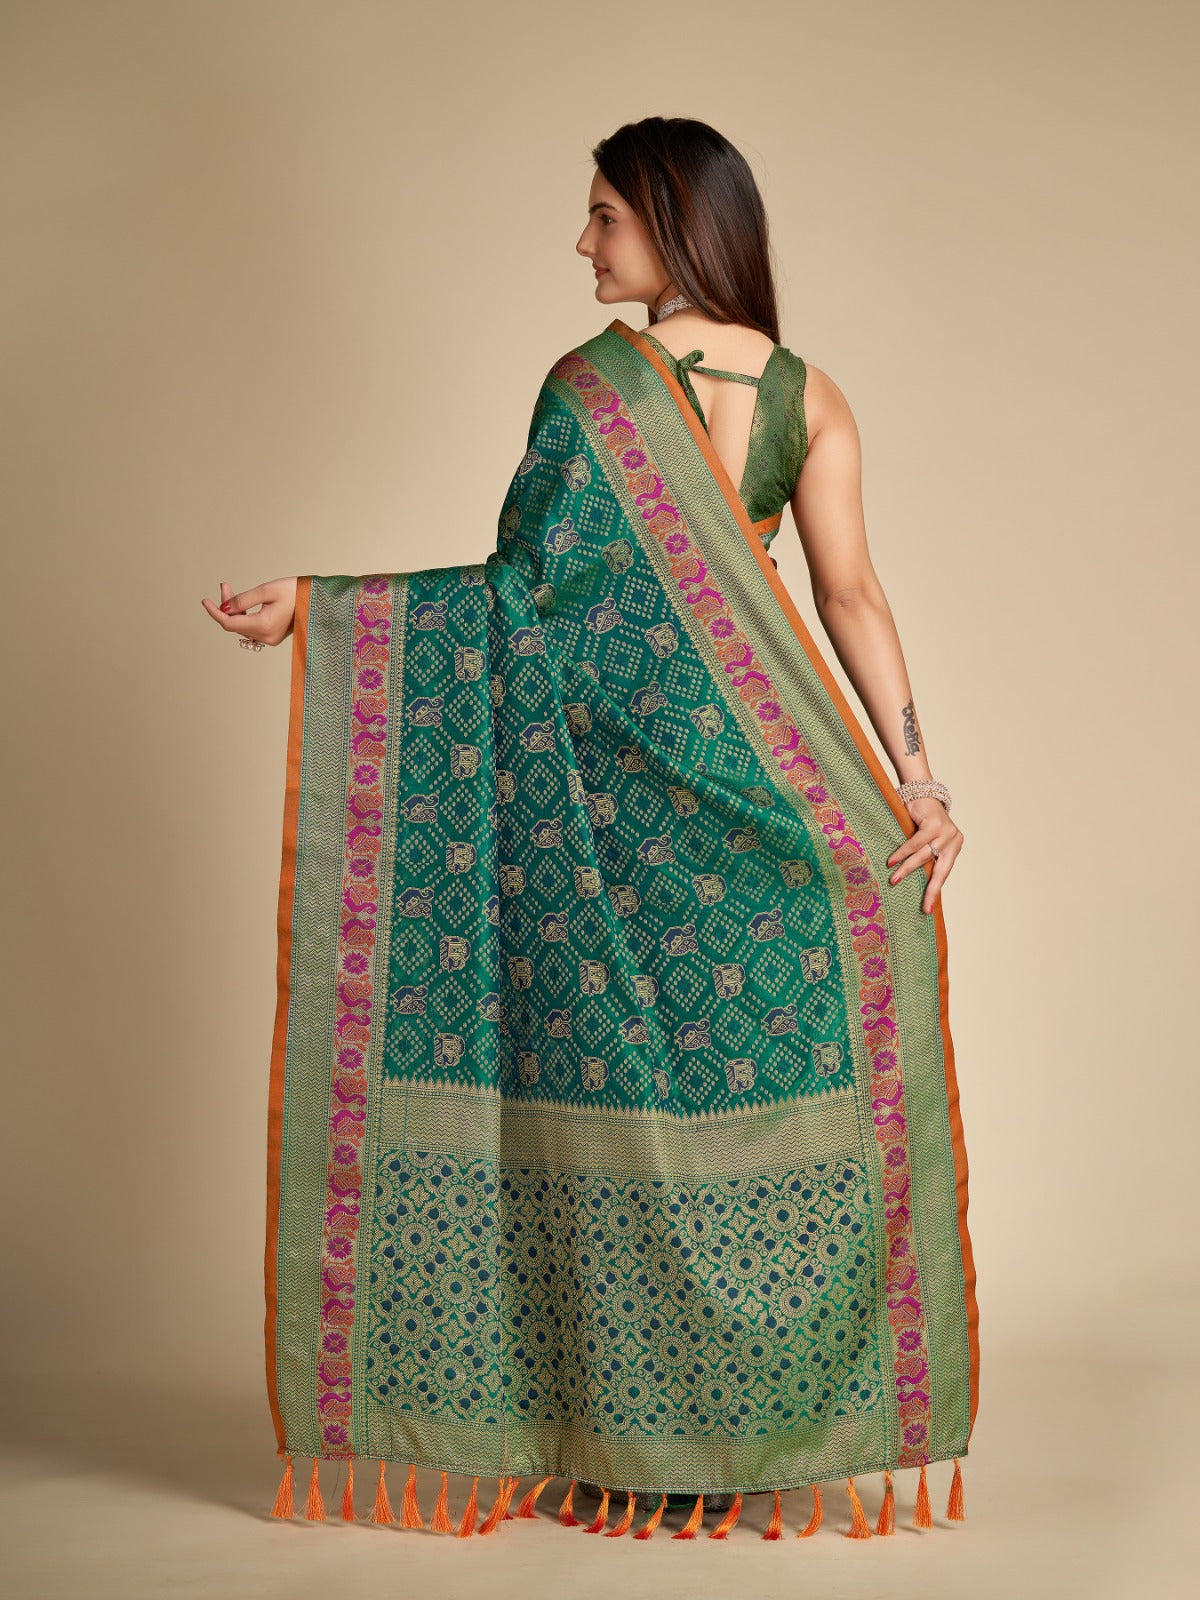 Women's Patola Silk Designer Saree Collection - Dwija Fashion